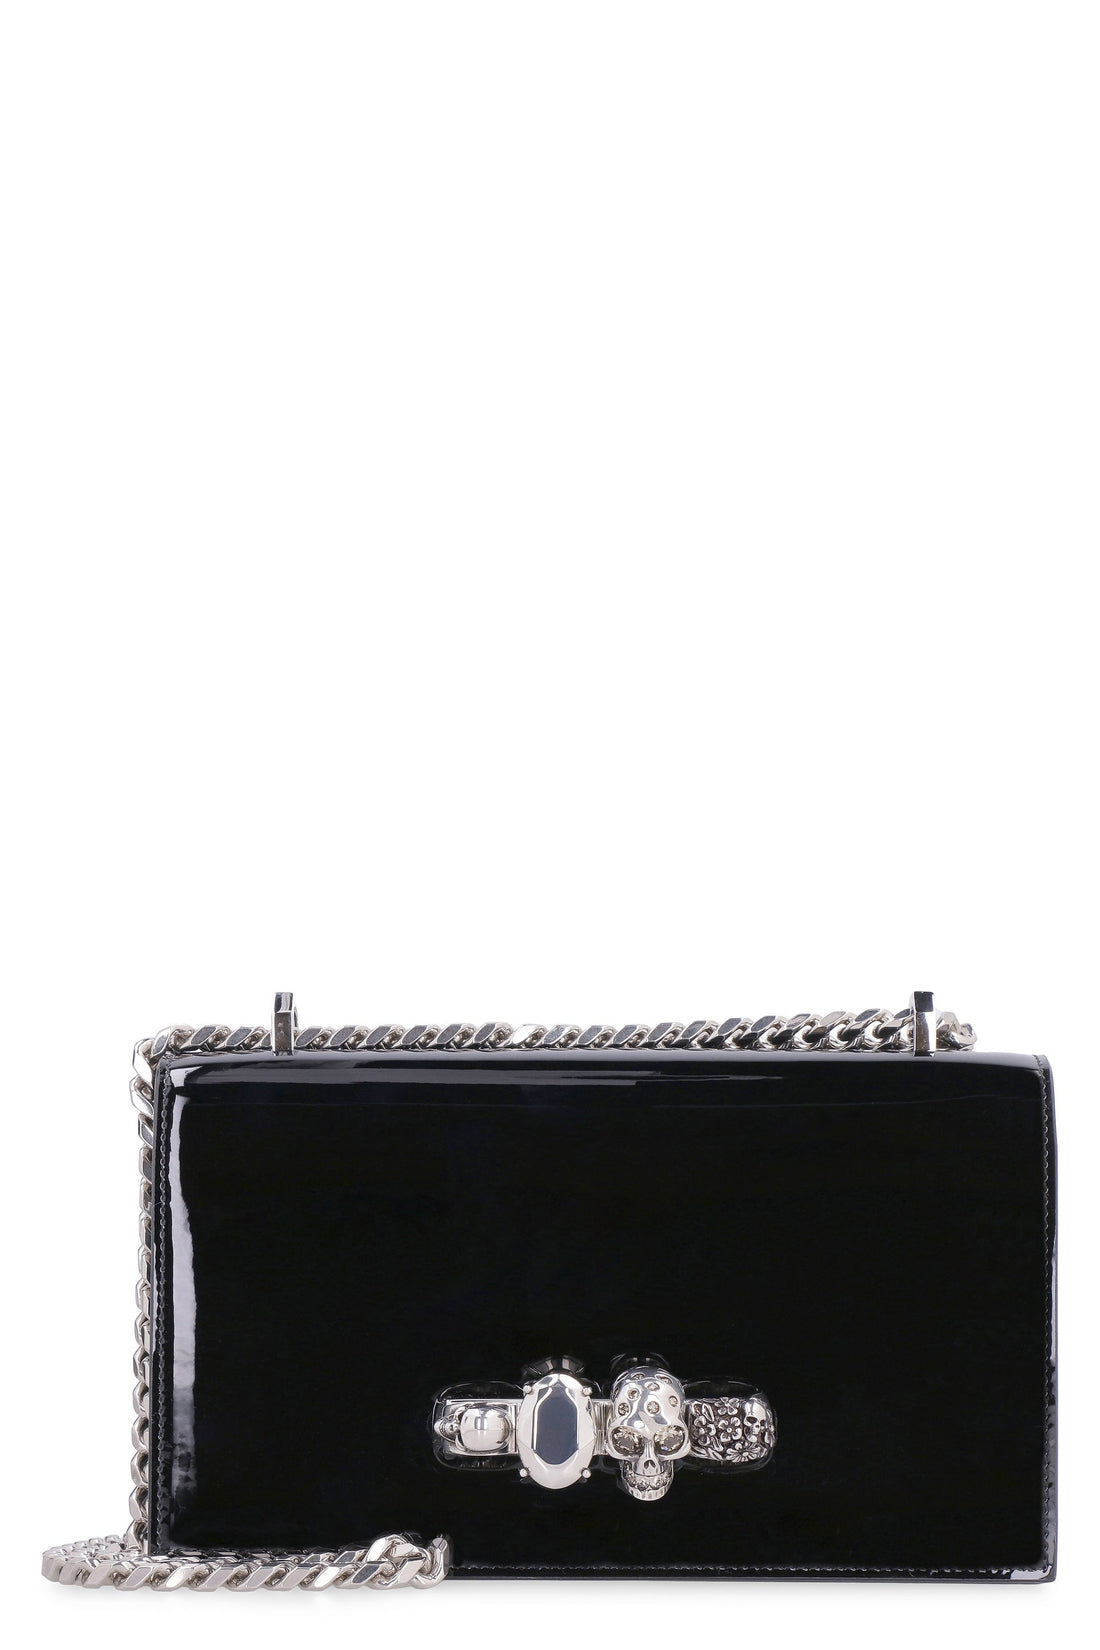 Alexander McQueen-OUTLET-SALE-Patent leather Mini Jewelled Satchel bag-ARCHIVIST